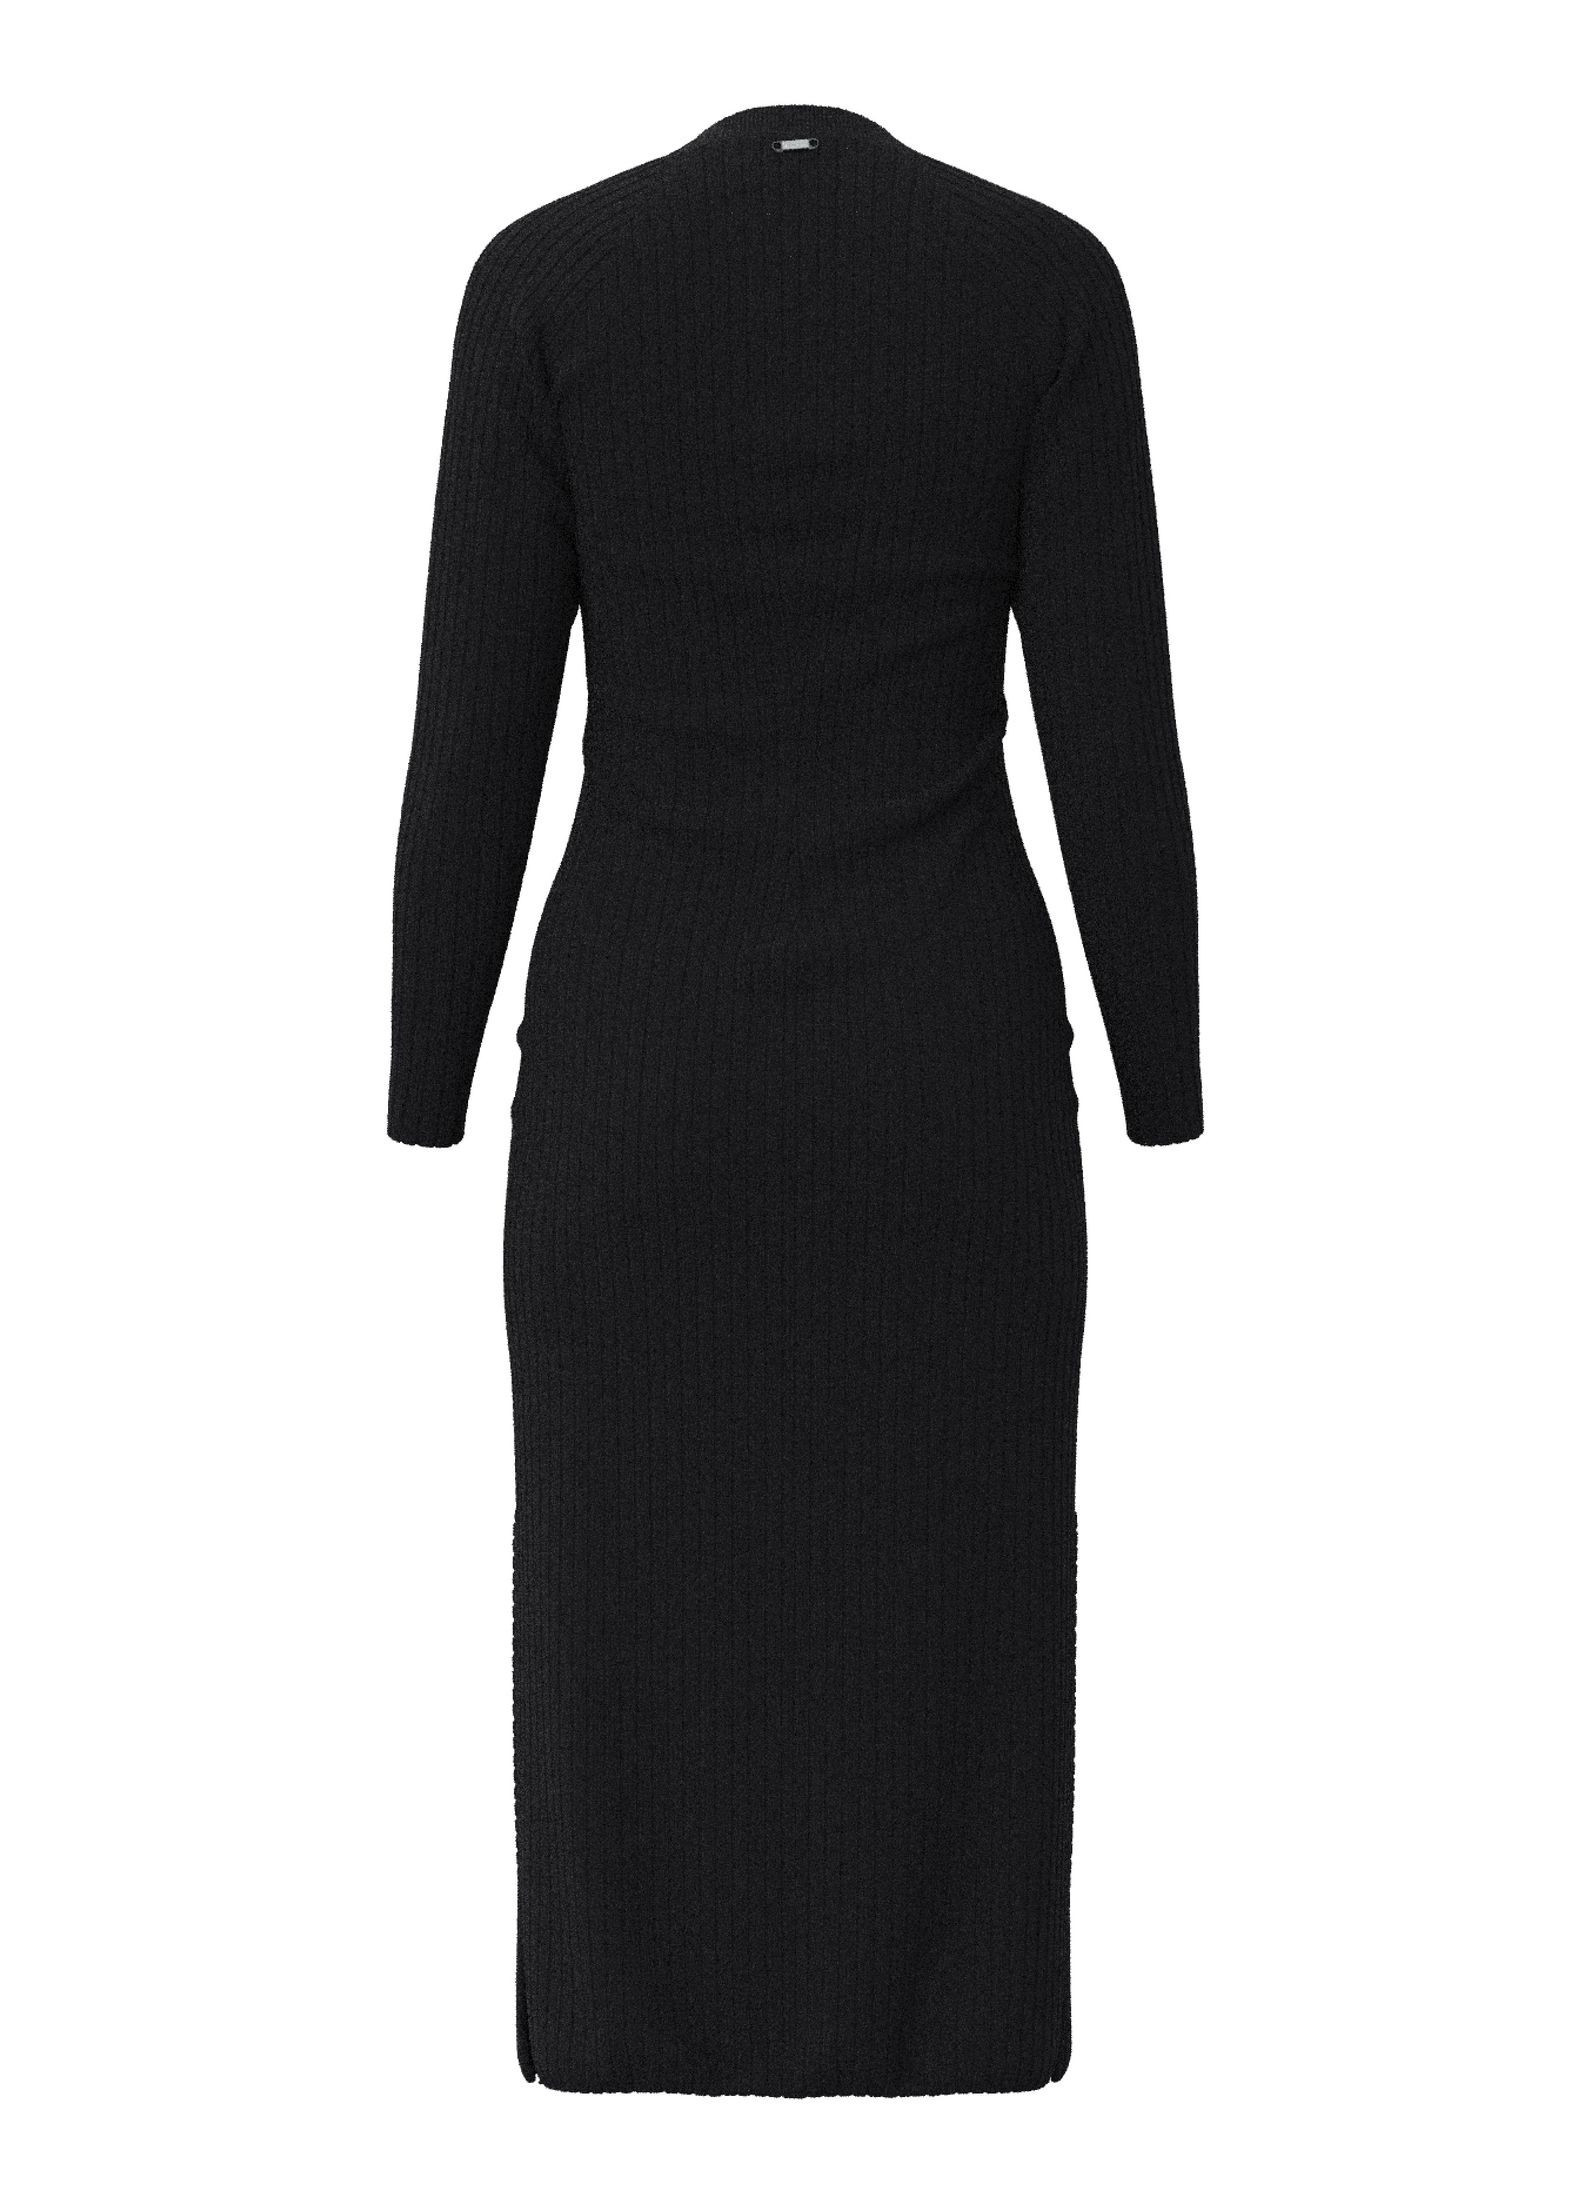 Knitted dress, Black, large image number 1